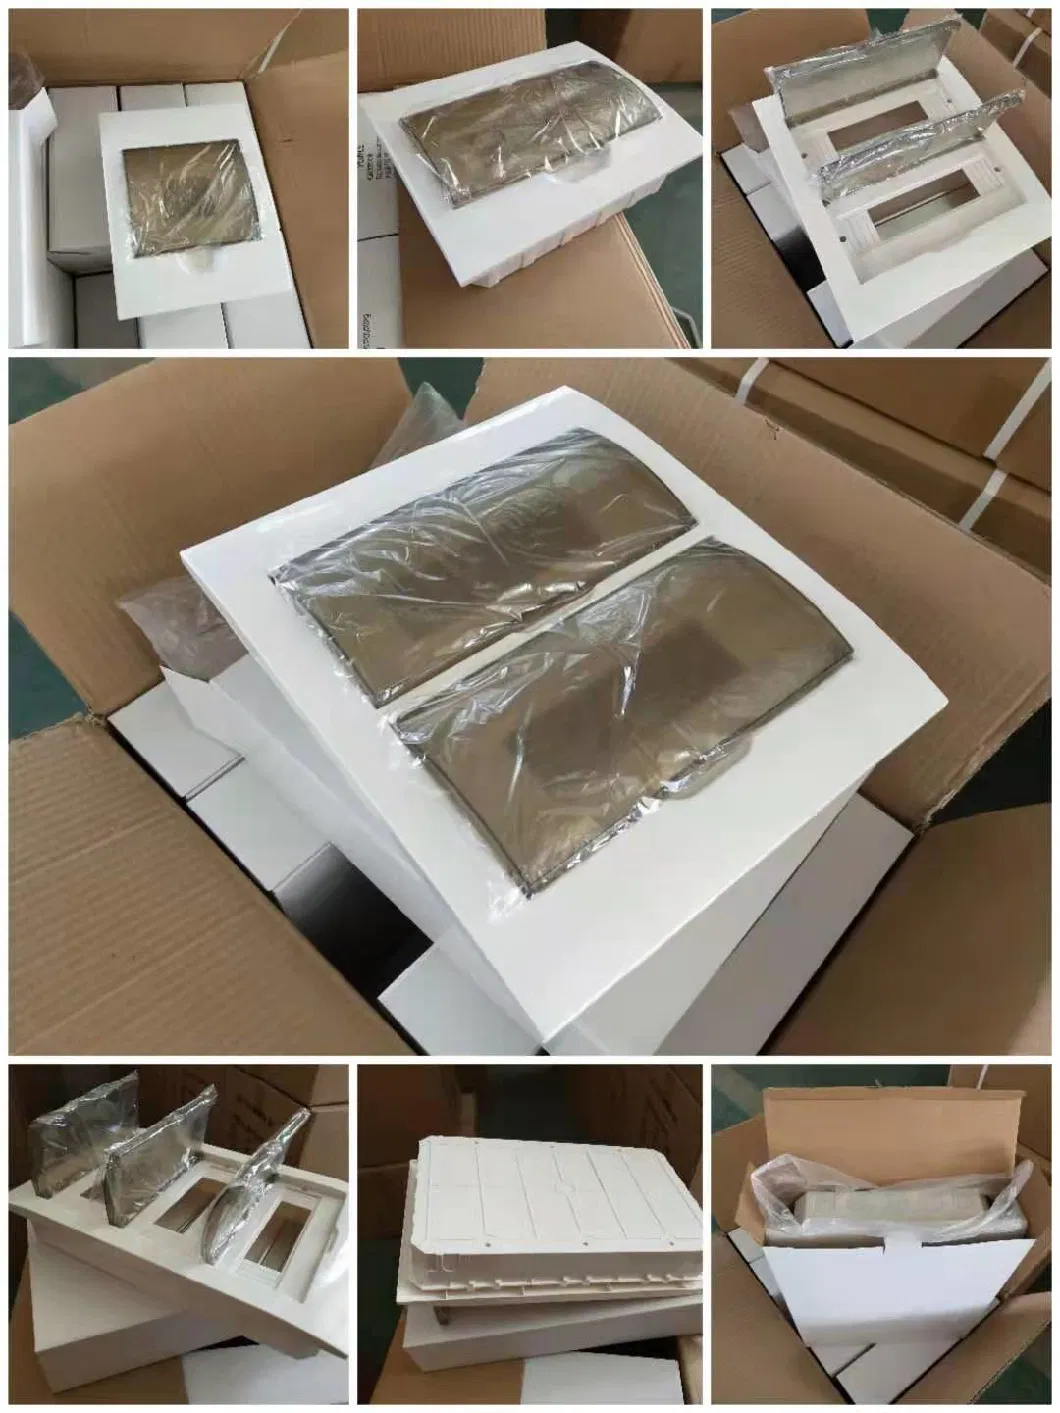 Hc-TF 6ways Tsm Surface Type Best Price DIN Rail Plastic Distribution Box Distribution Board Factory